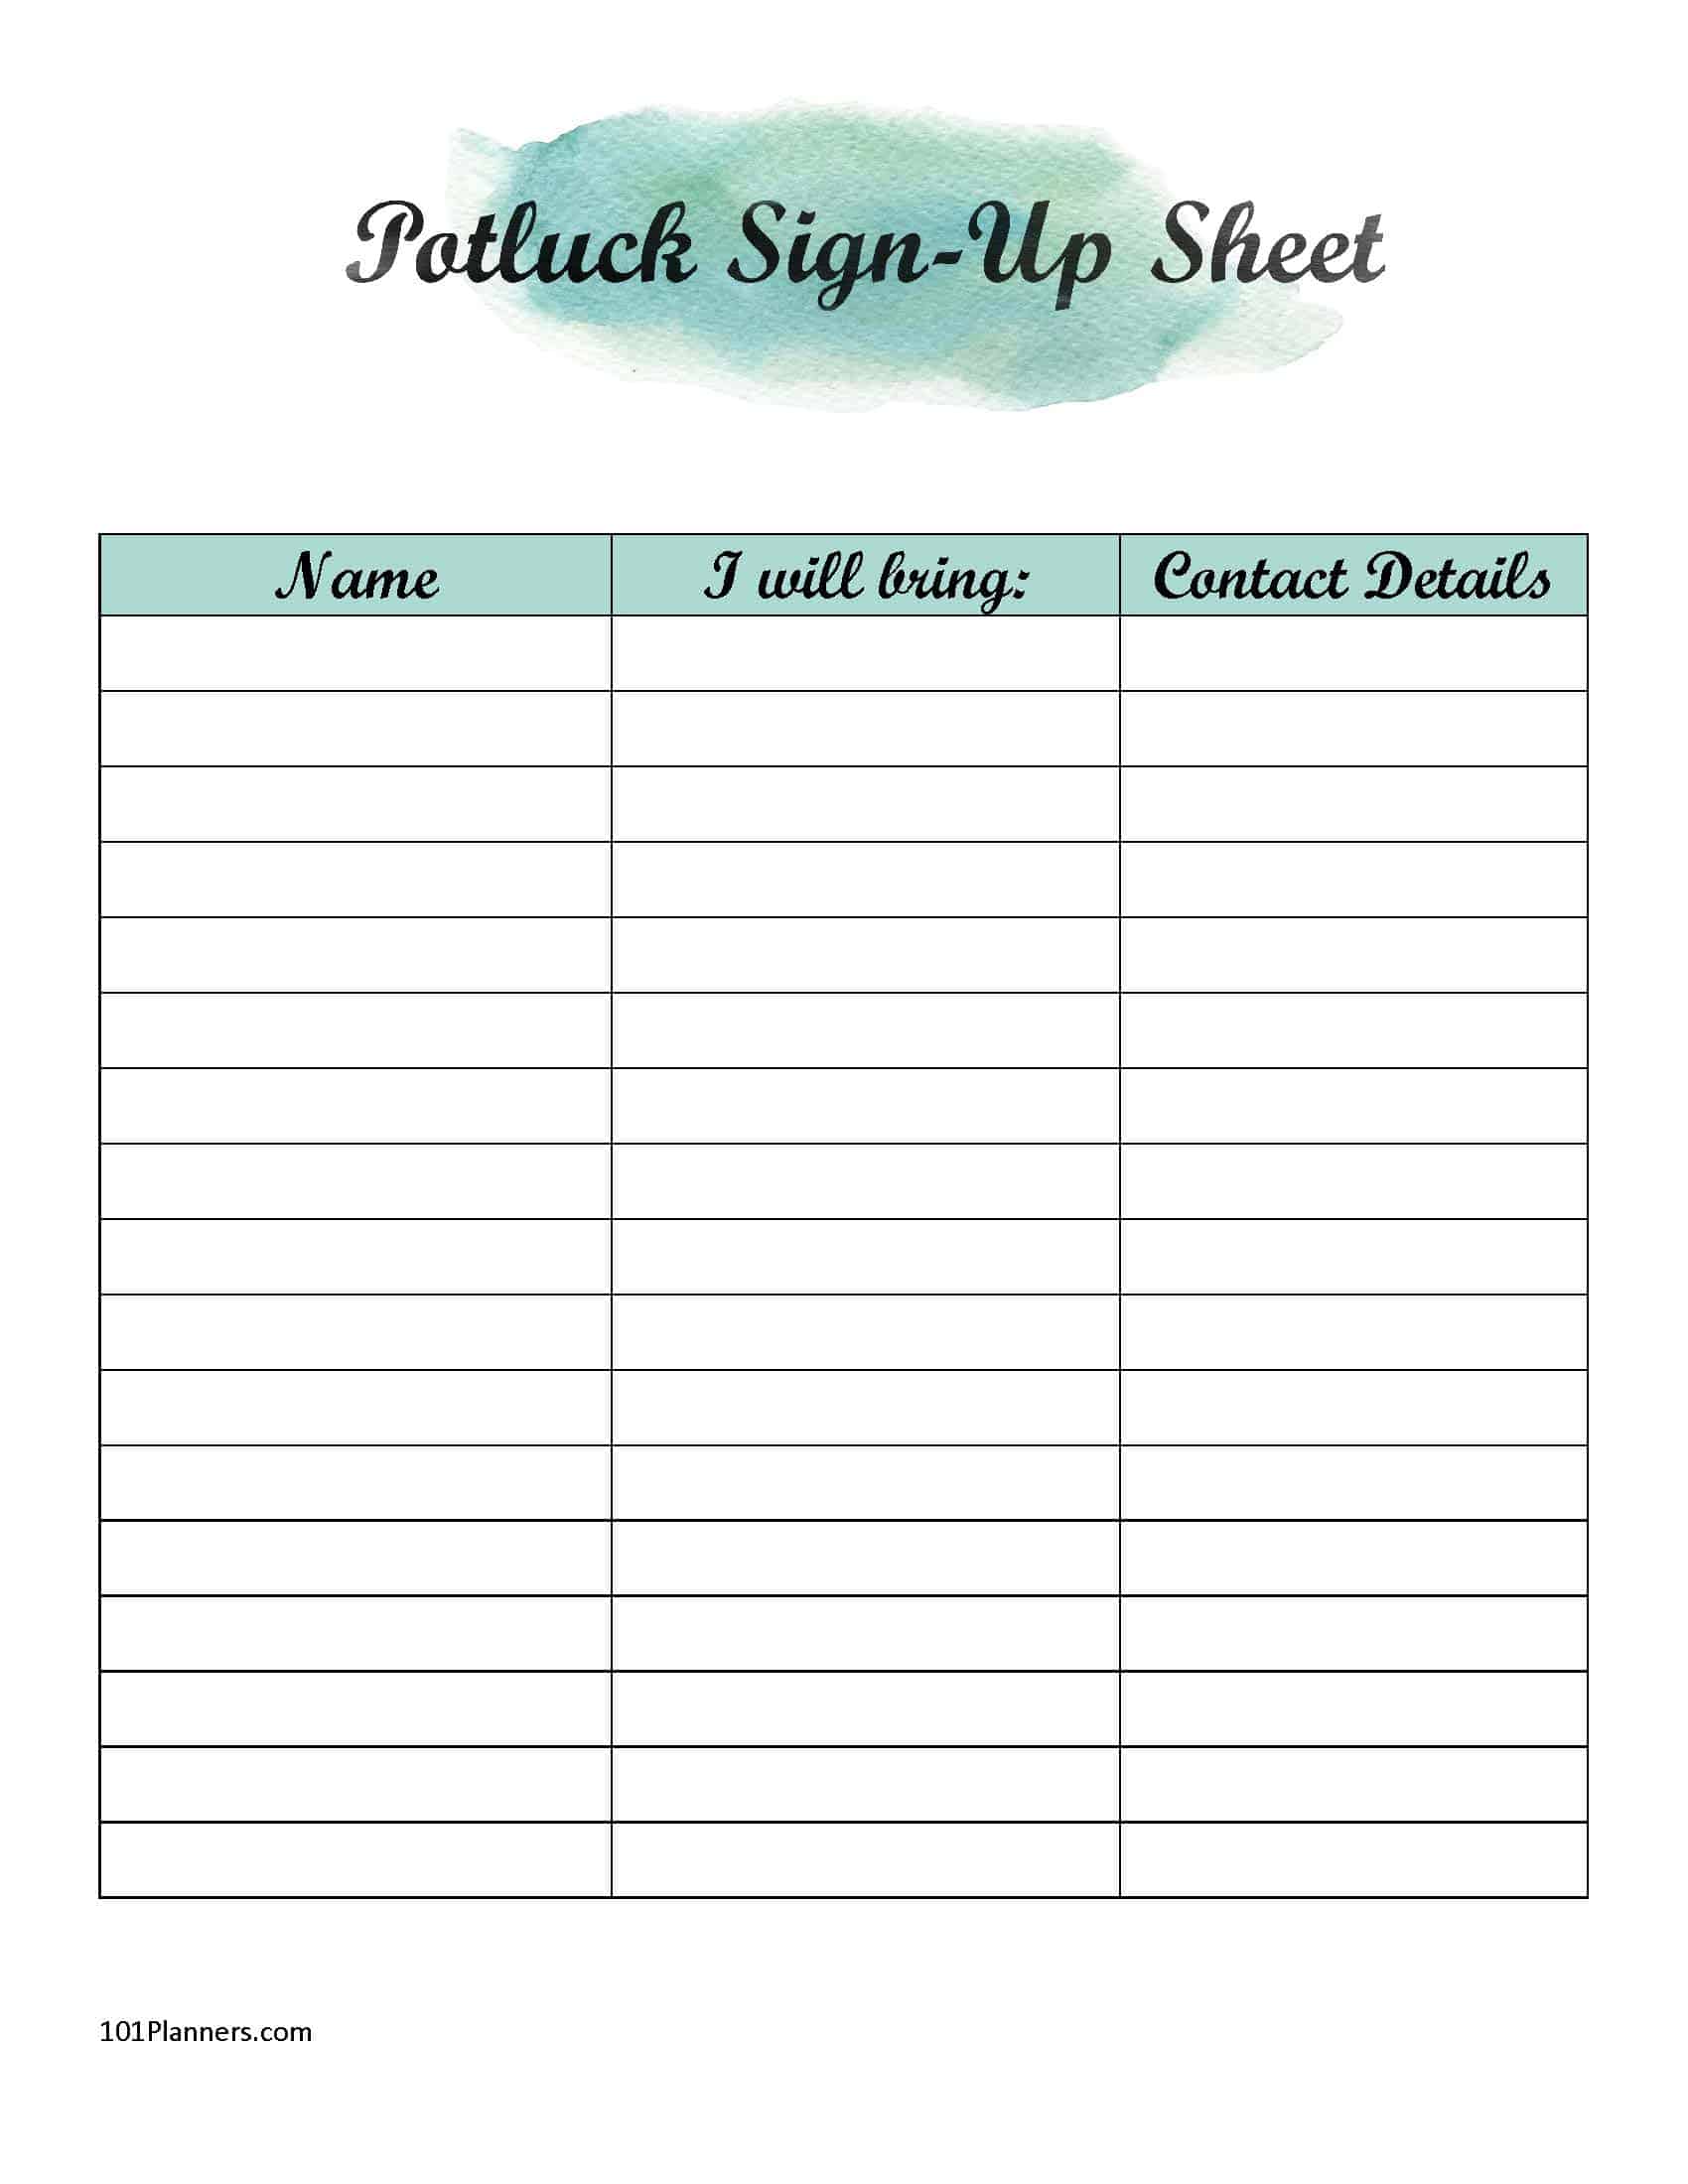 free-printable-potluck-sign-up-sheet-template-word-free-printable